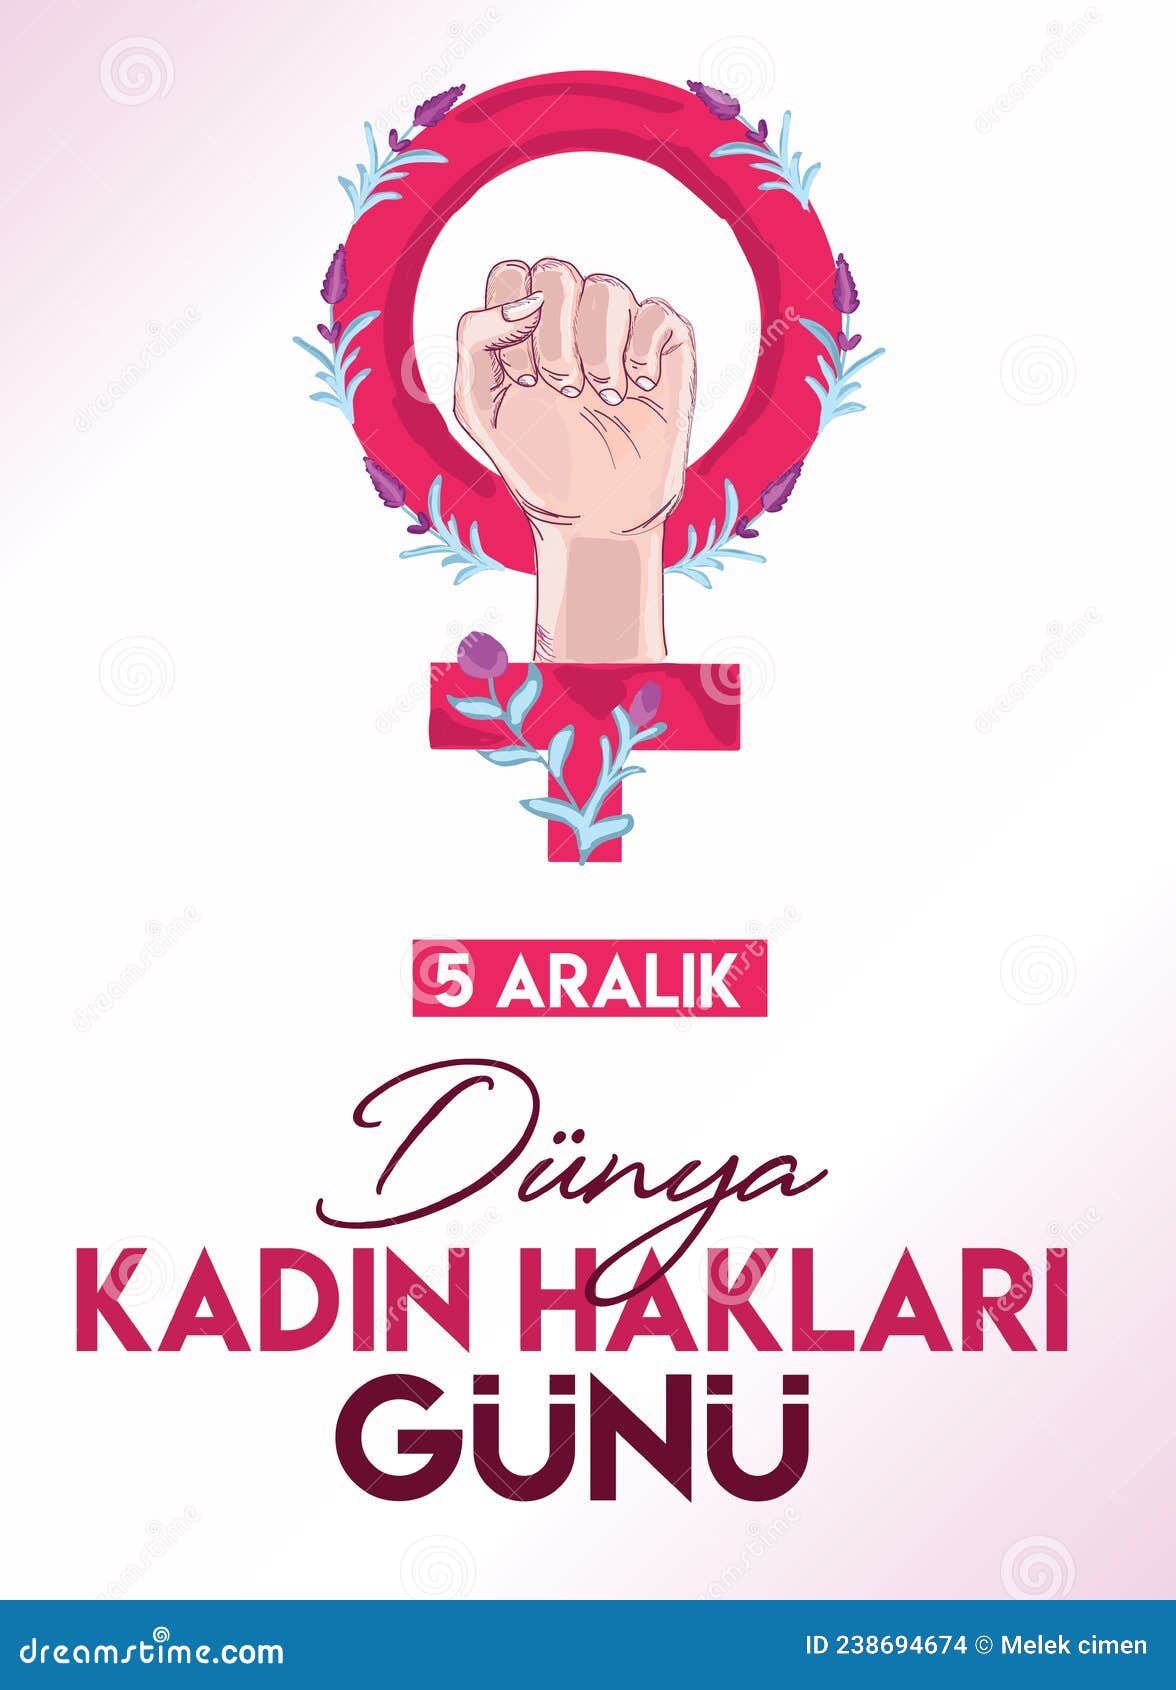 5 aralik kadin haklari gunu. translation: 5 december womens rights day